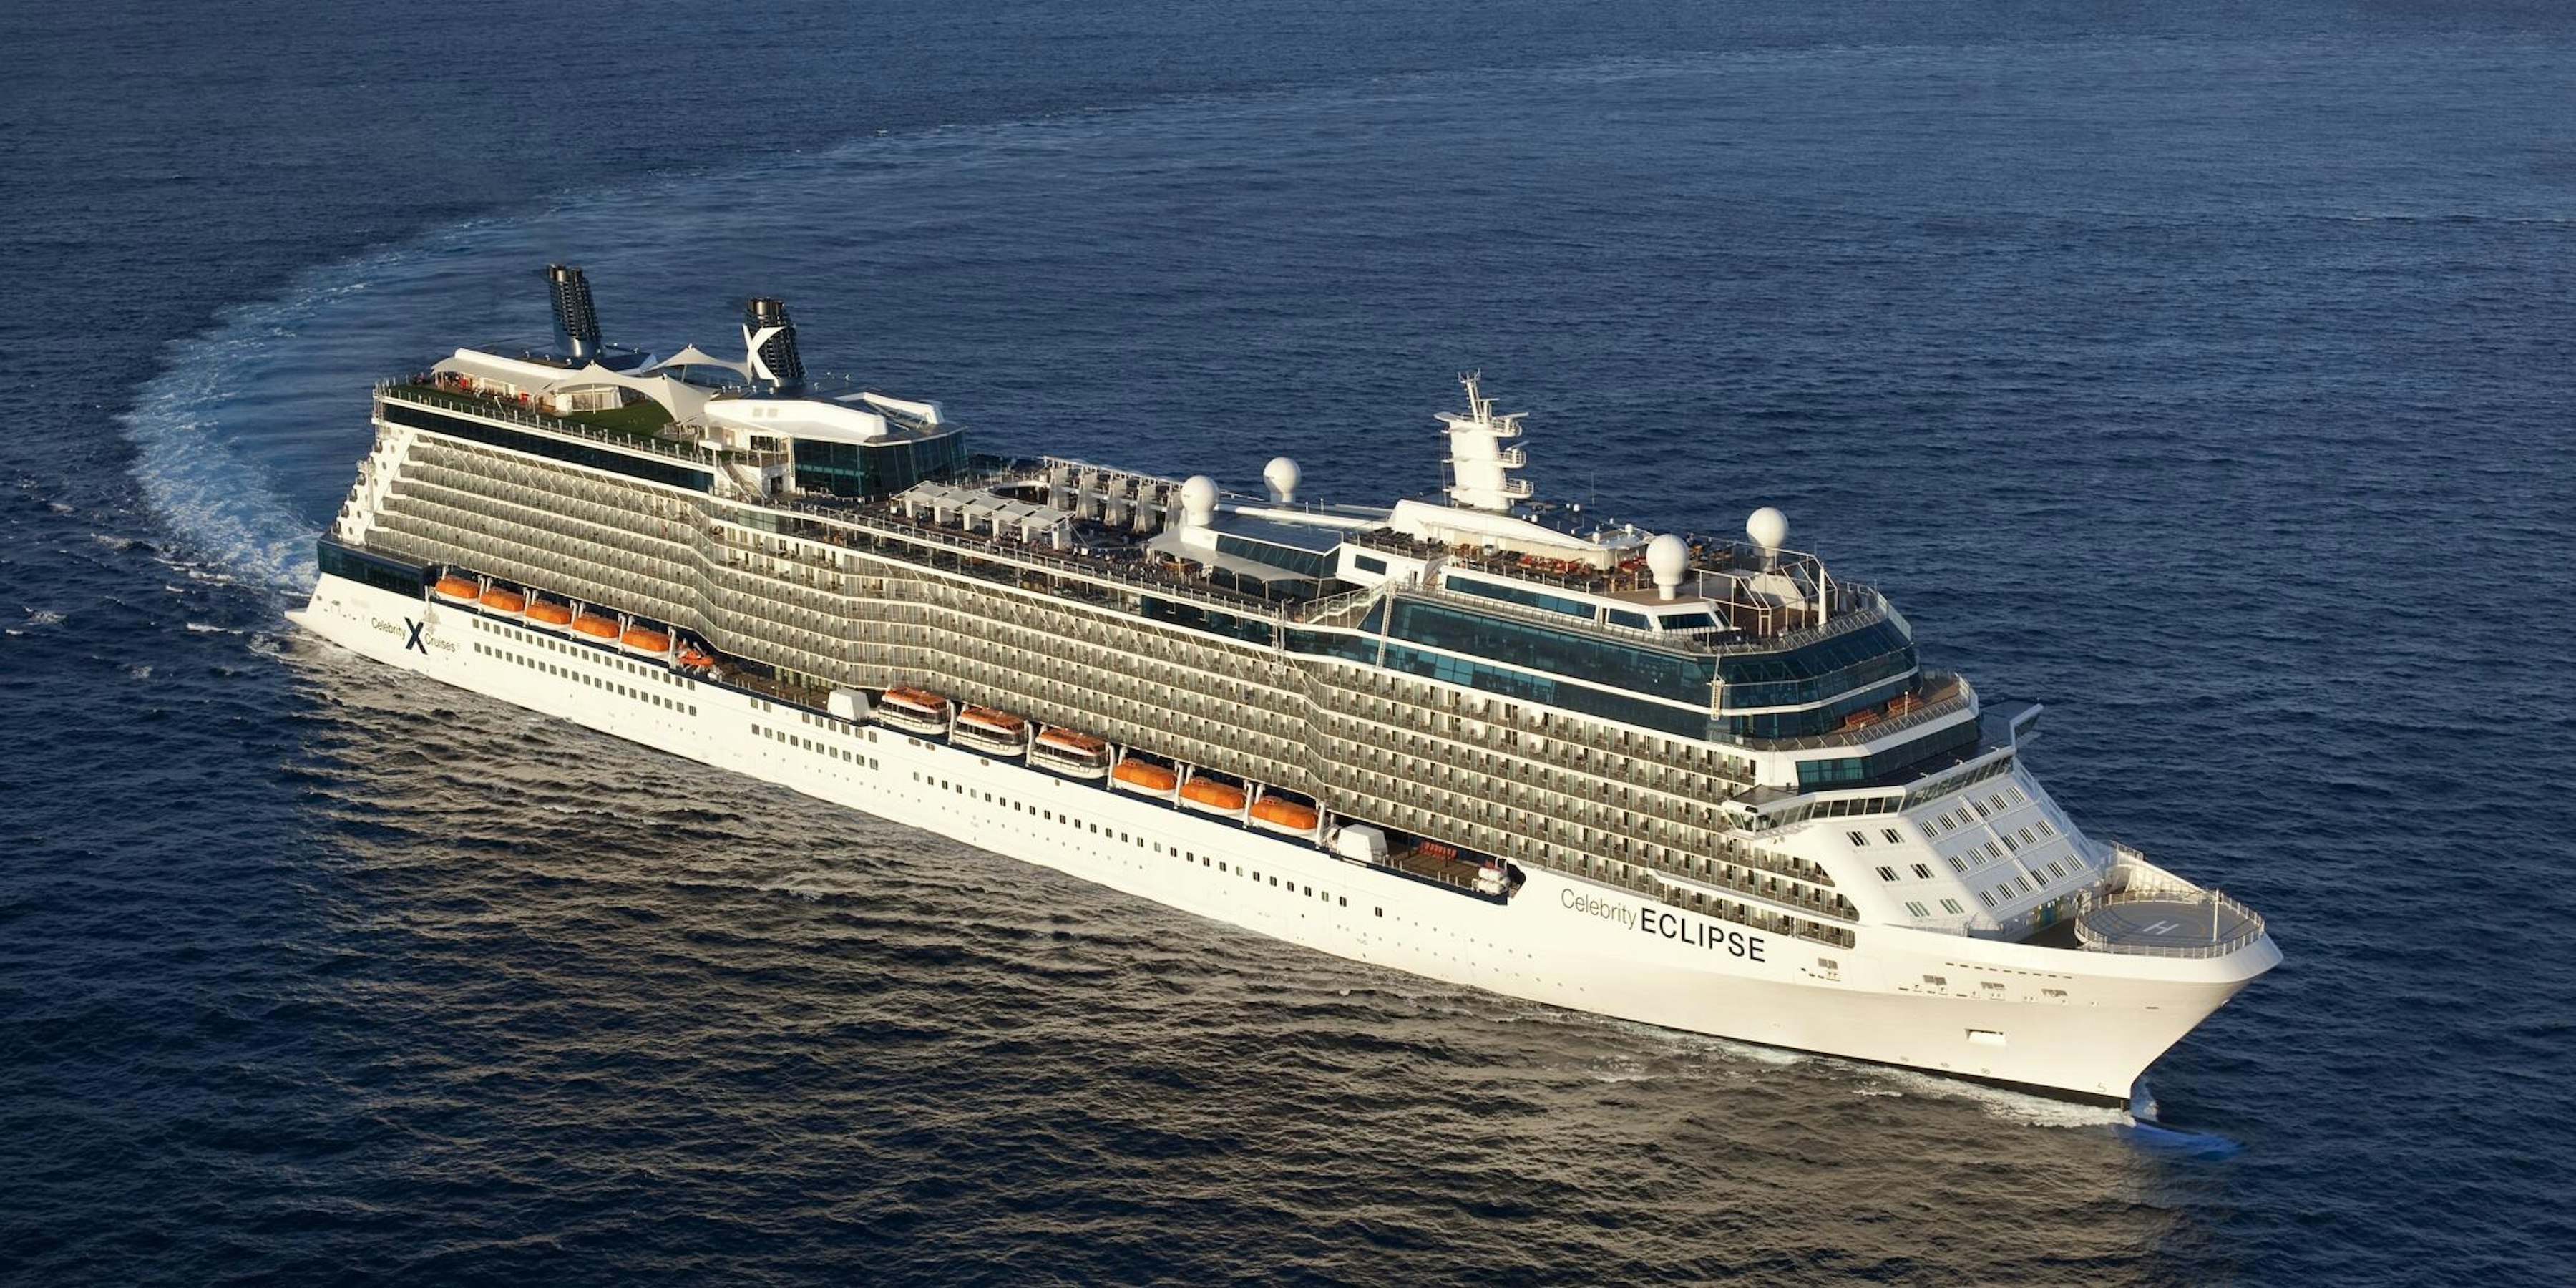 cruise ship refurbishment schedule 2021